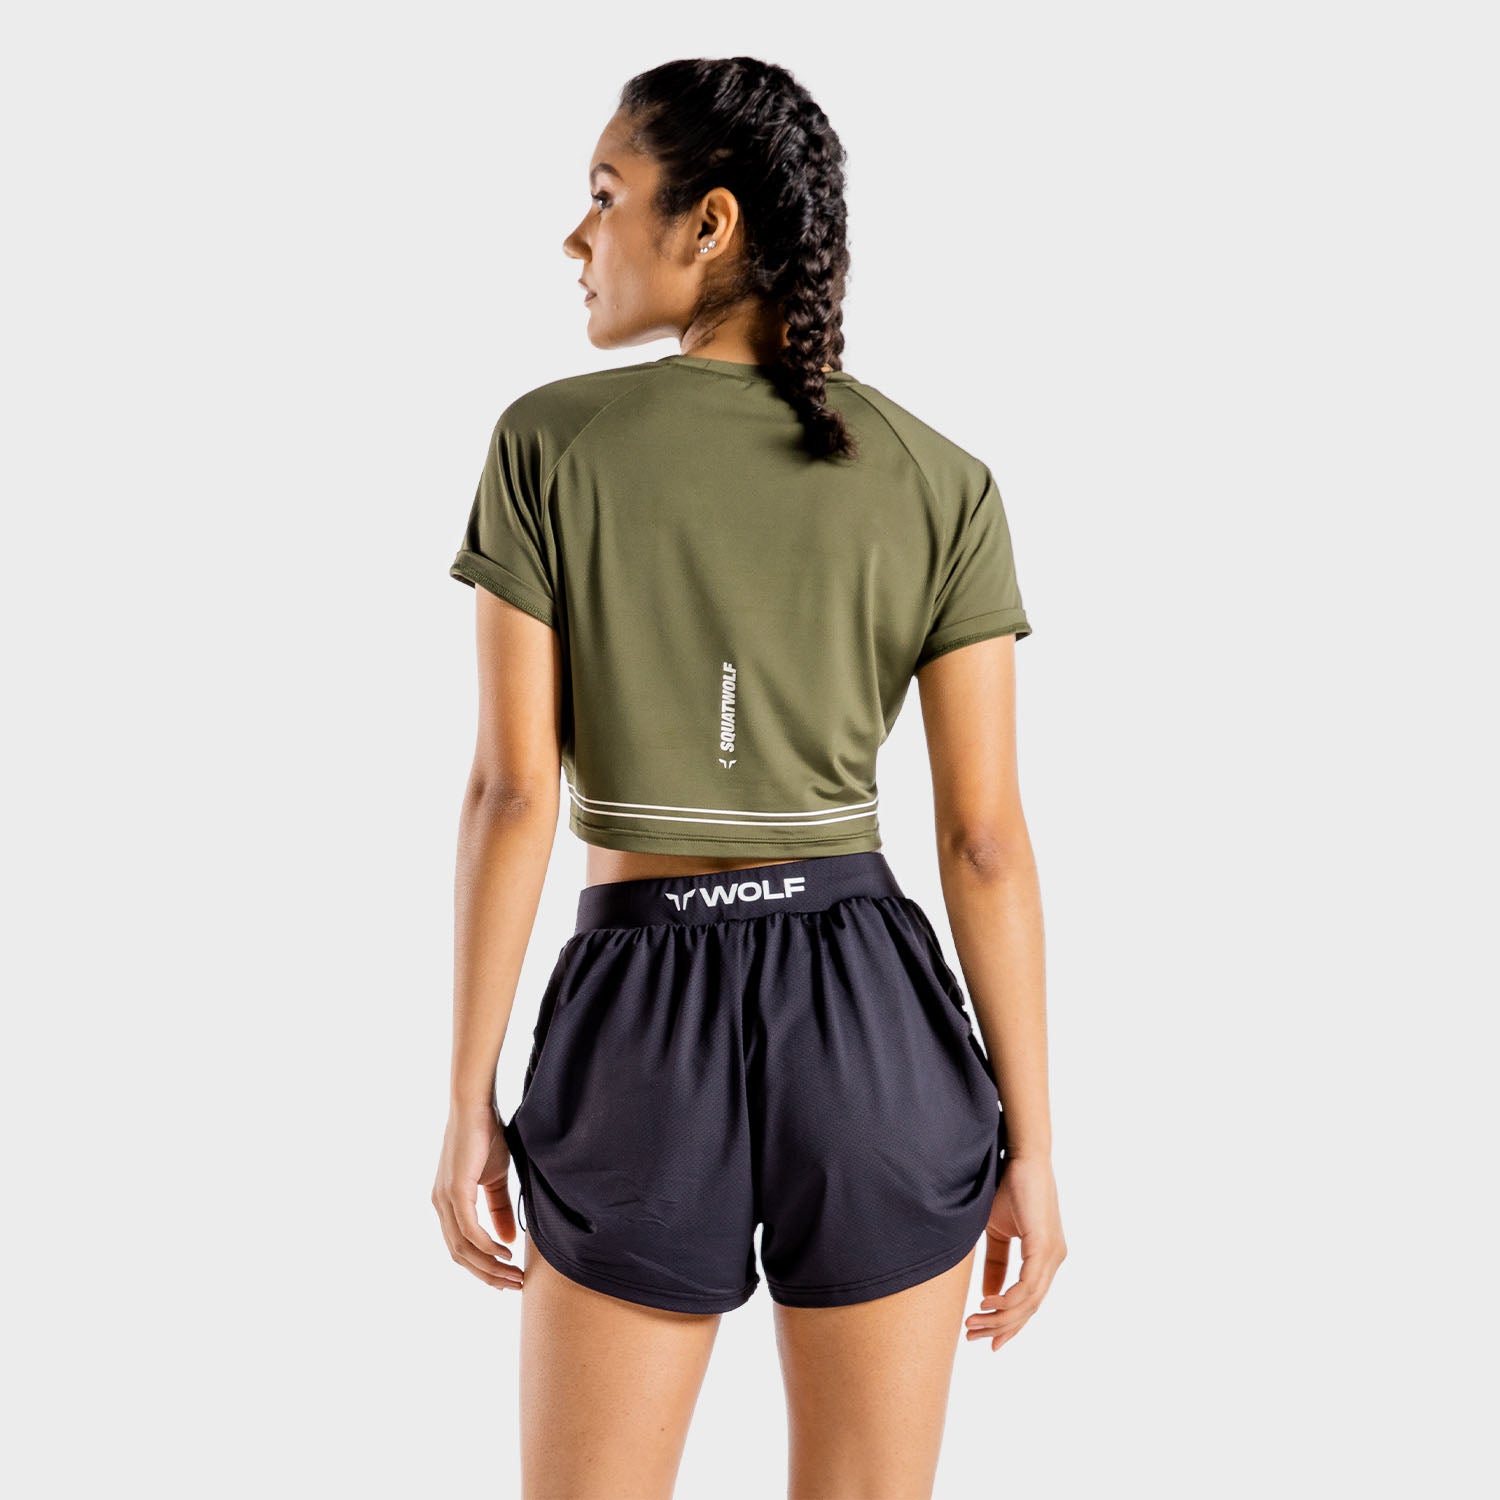 squatwolf-gym-t-shirts-for-women-flux-crop-tee-khaki-workout-clothes